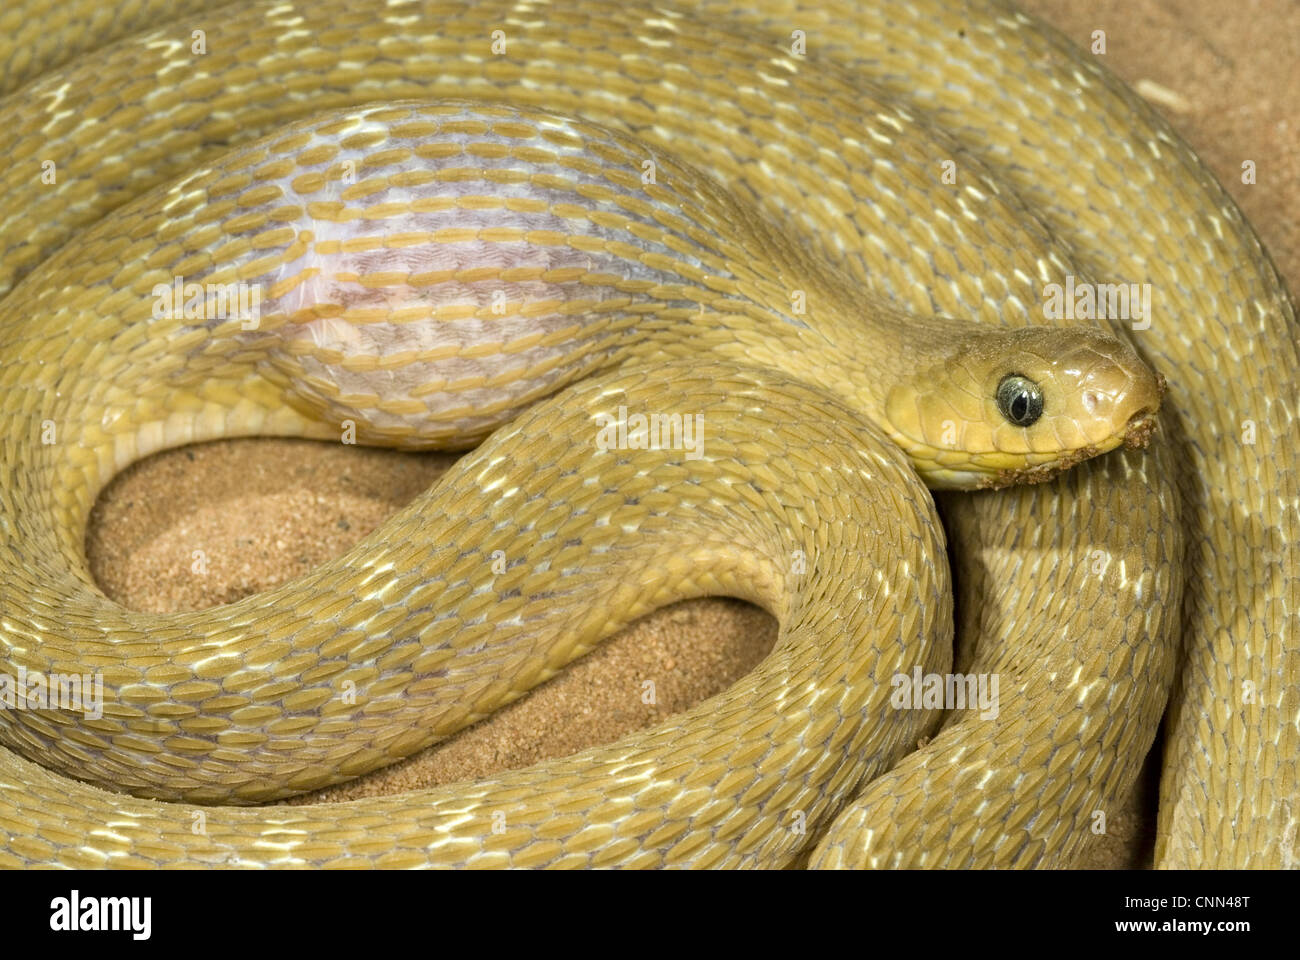 Common Egg-eater Snake (Dasypeltis scabra) adult, feeding, after having swallowed egg, Sindou, Leraba Province, Burkina Faso Stock Photo